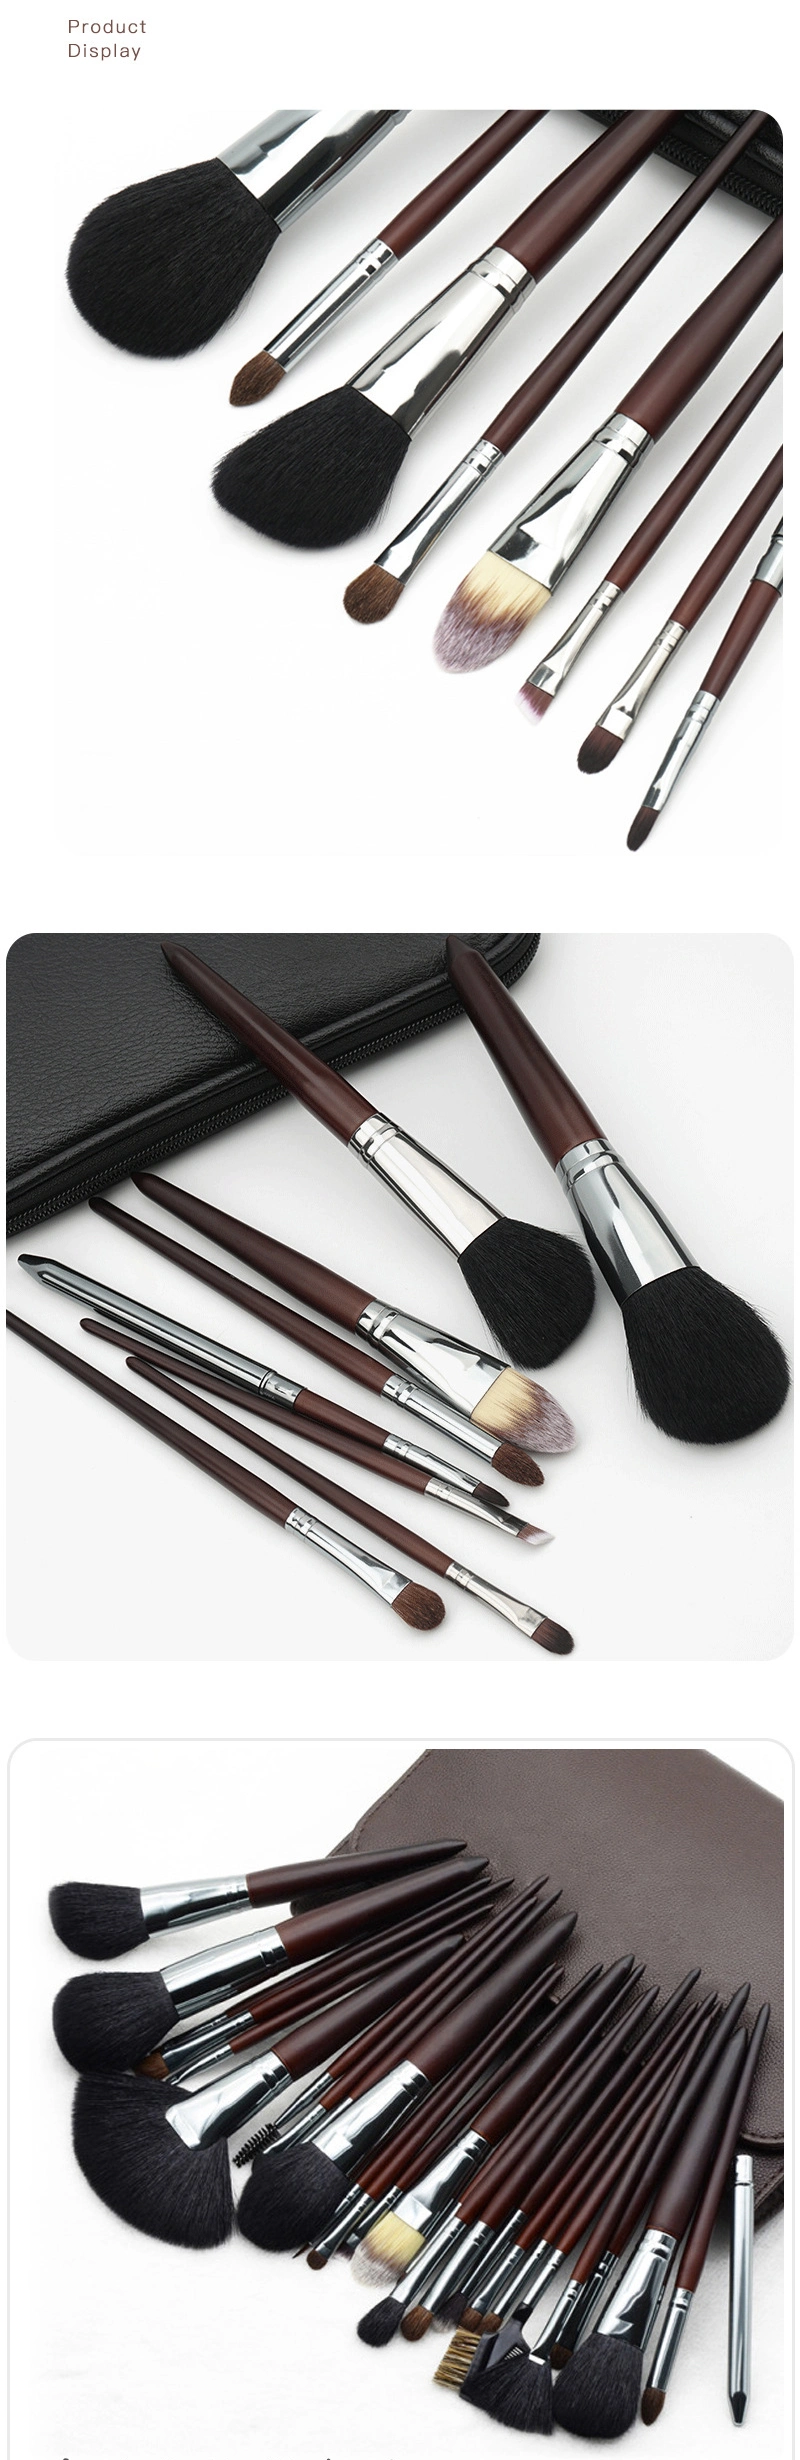 26PCS Professional Makeup Artist Brush Set Premium Goat Hair Foundation Powder Eyeshadow Lip Brush